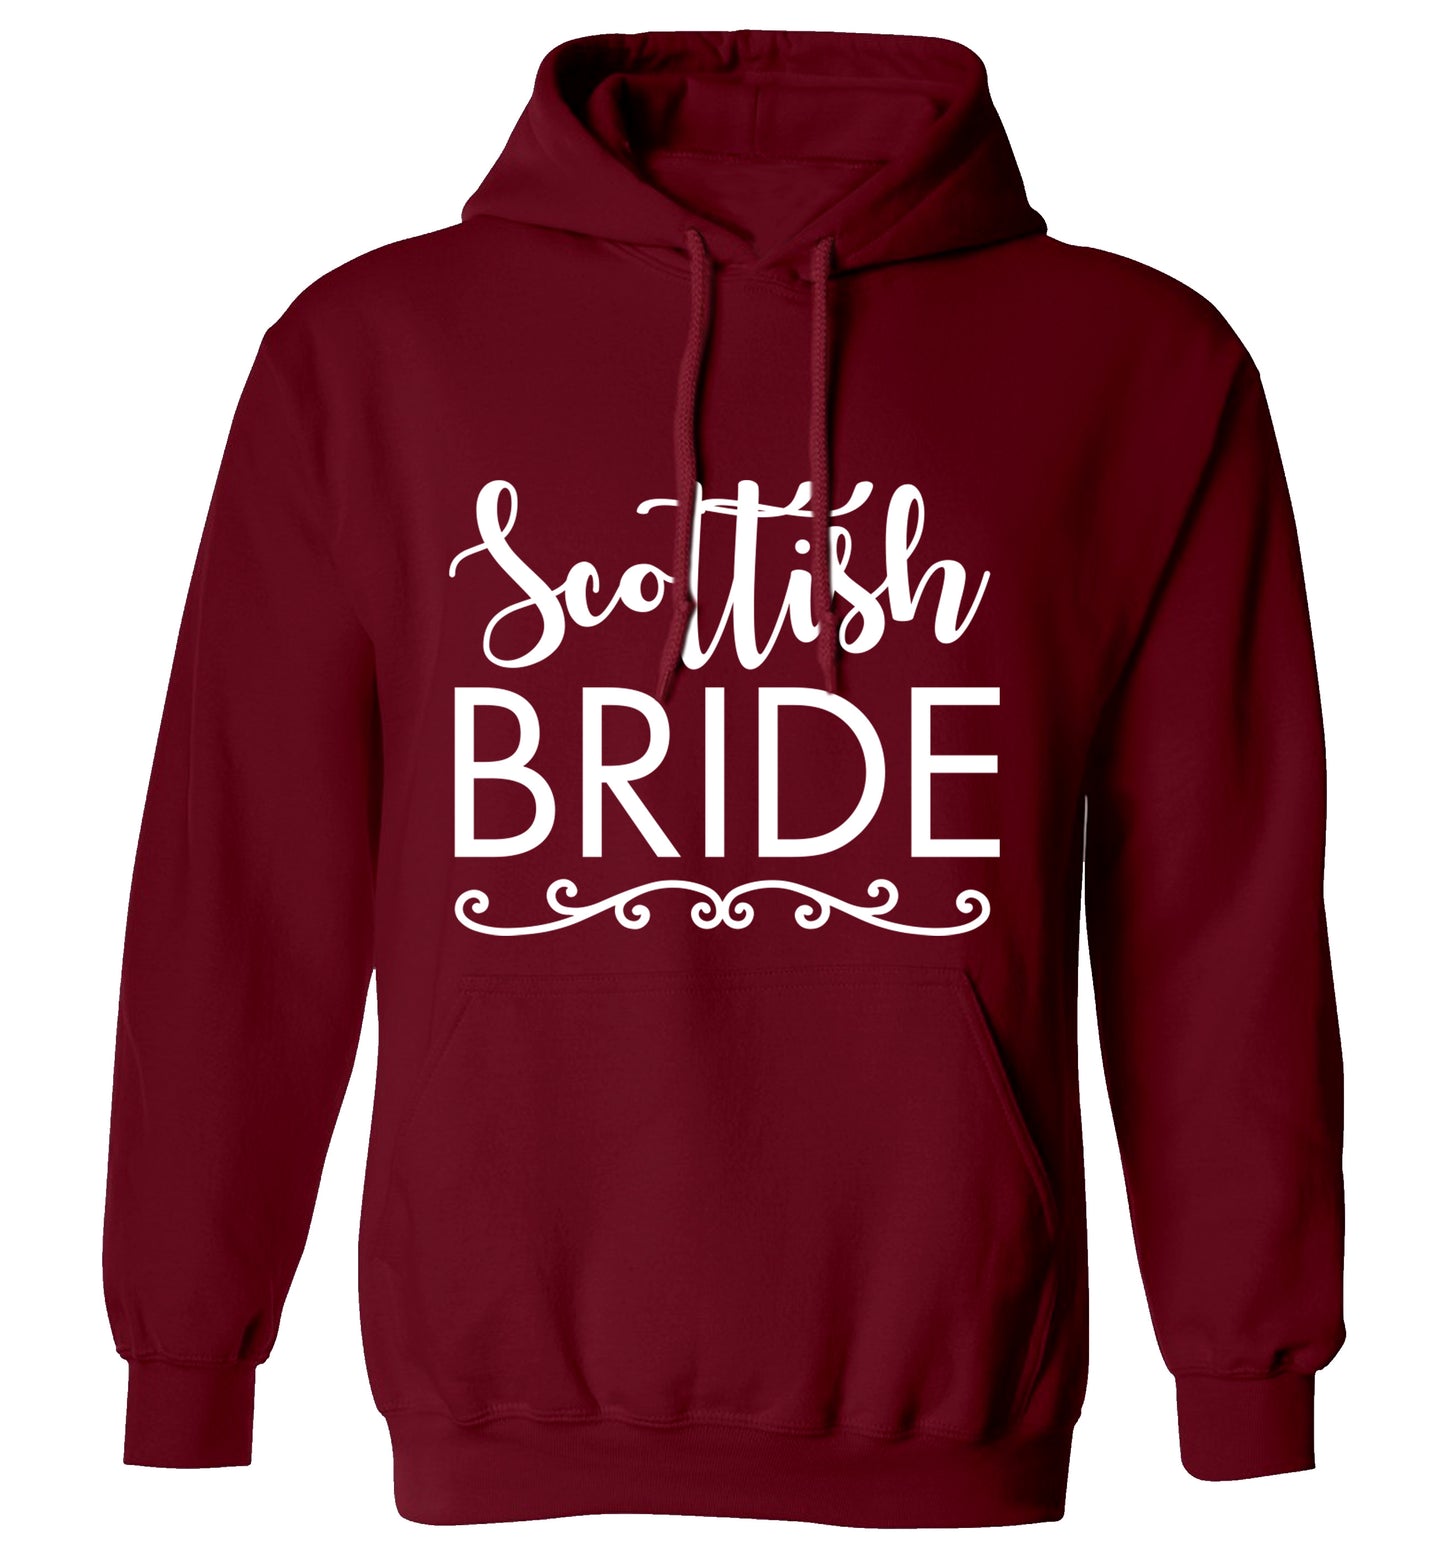 Scottish Bride adults unisex maroon hoodie 2XL